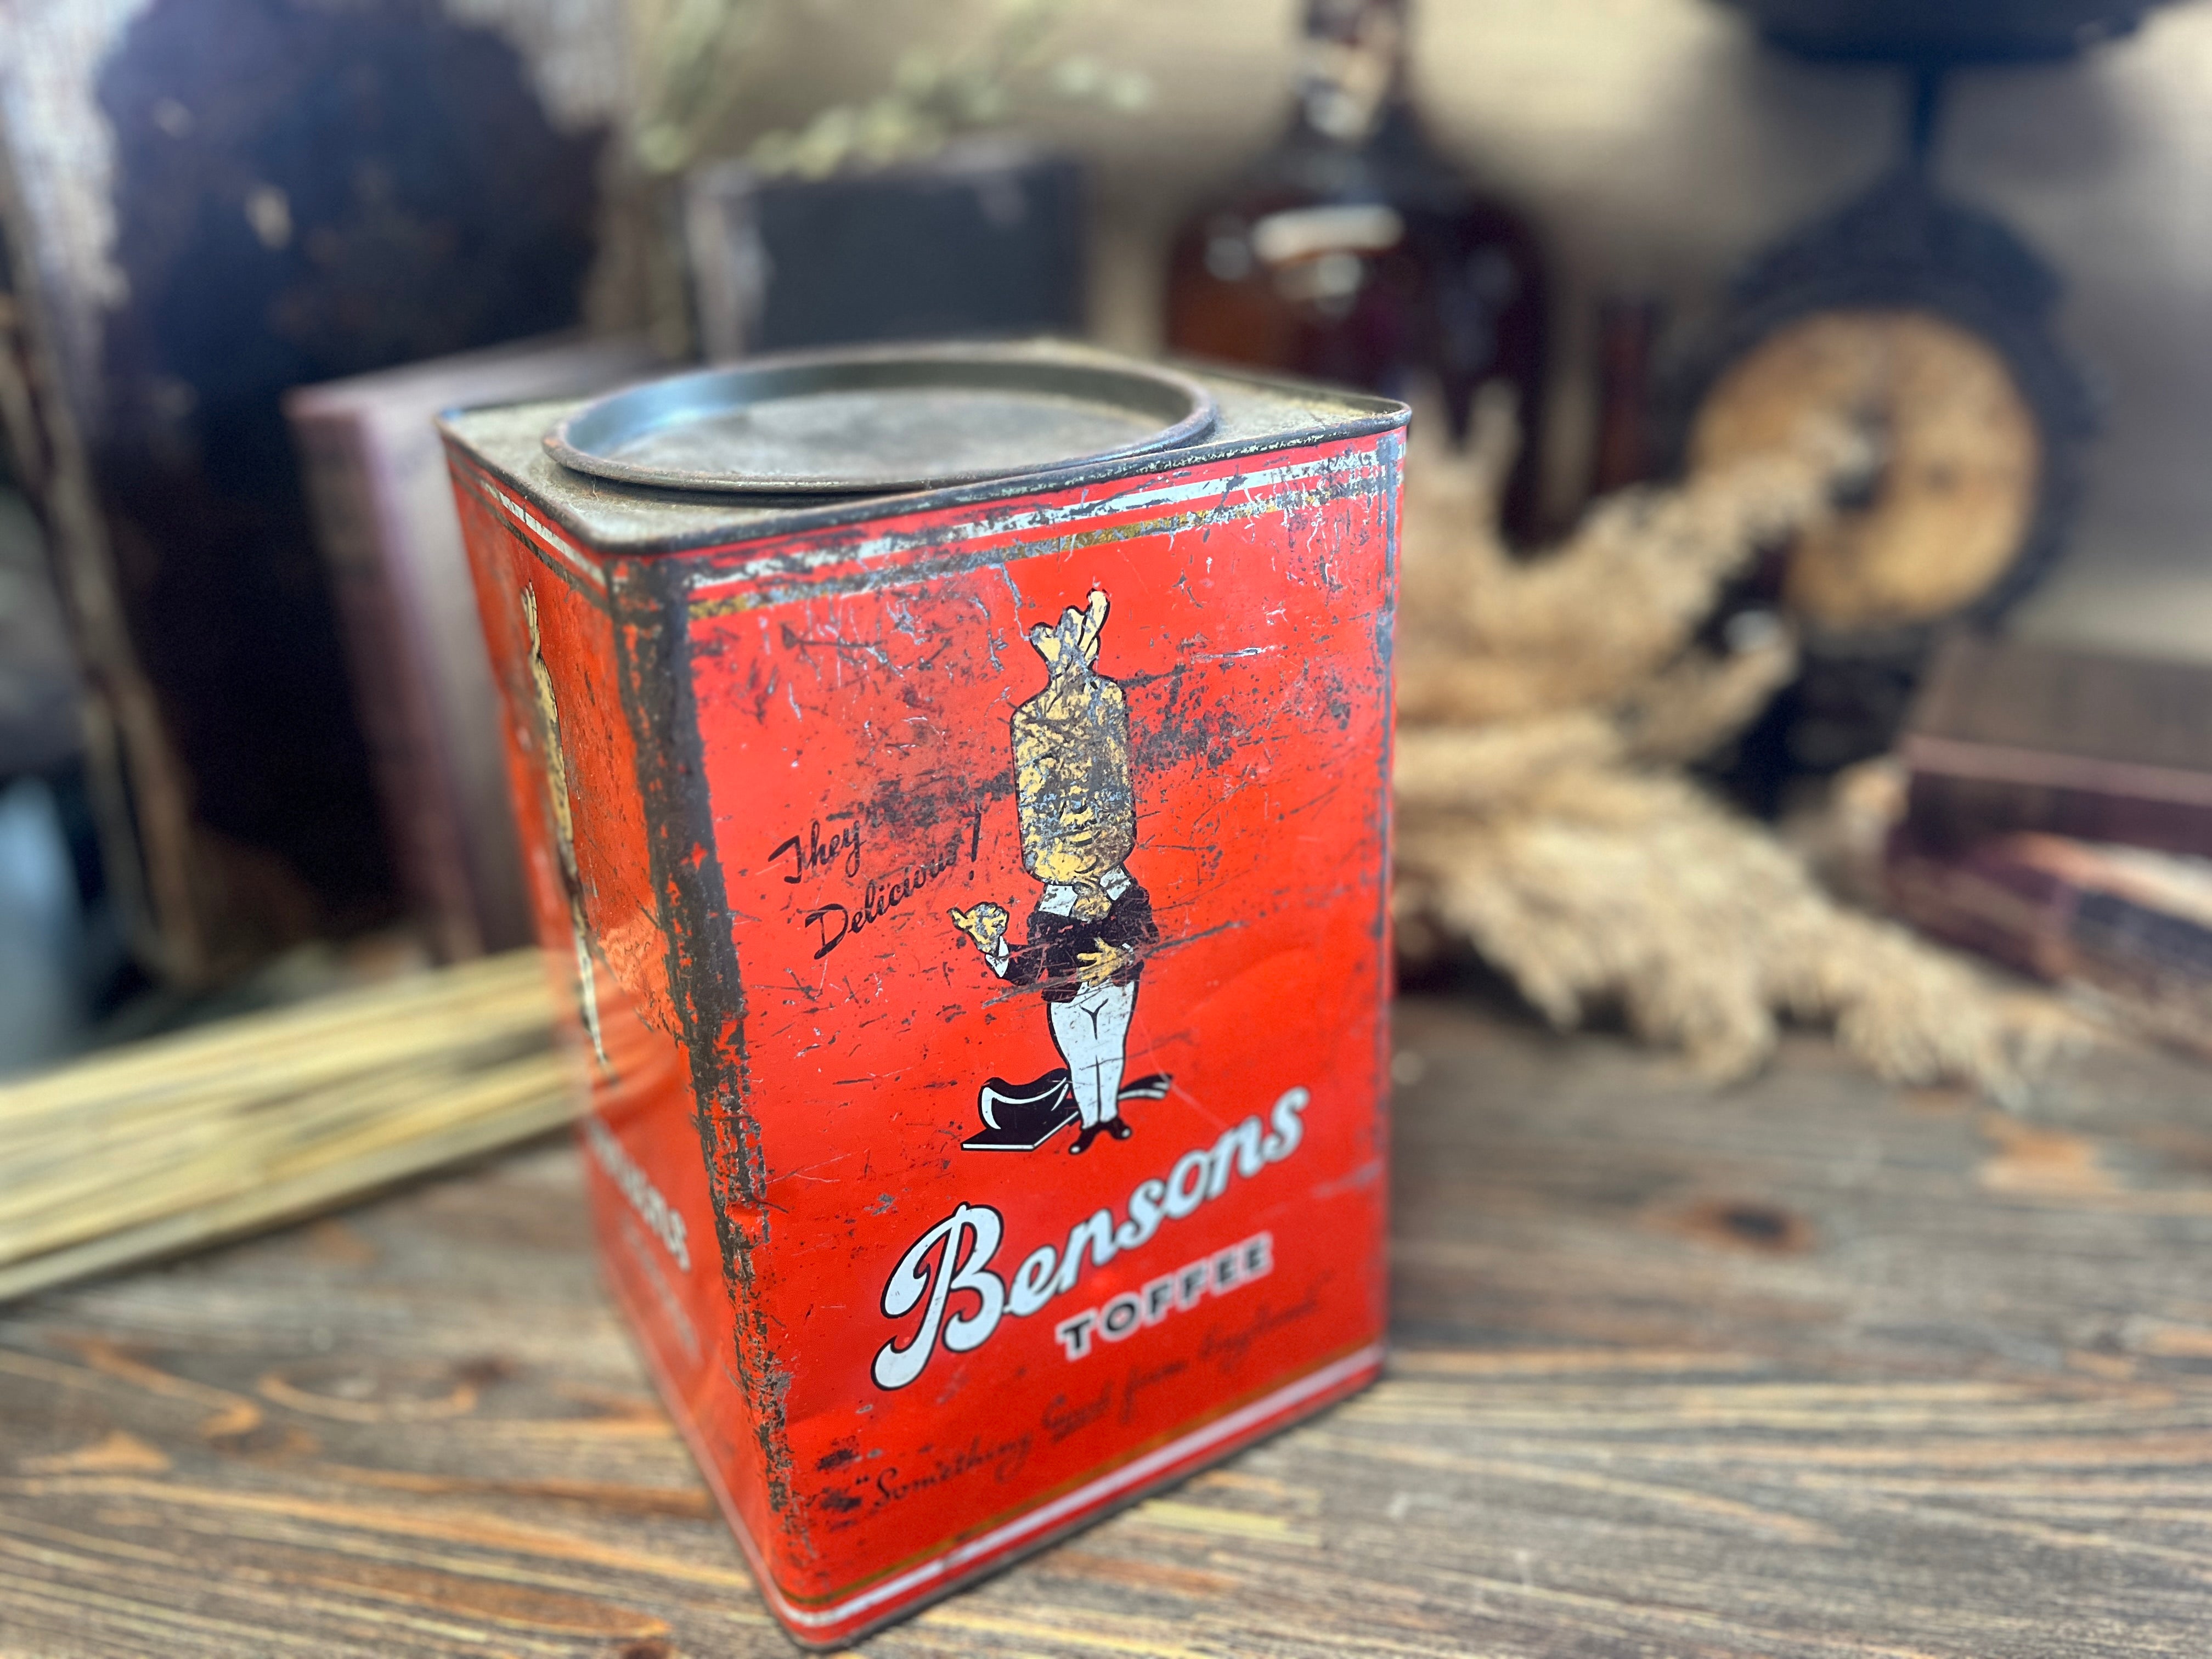 Vintage Bensons TOFFEE Tin